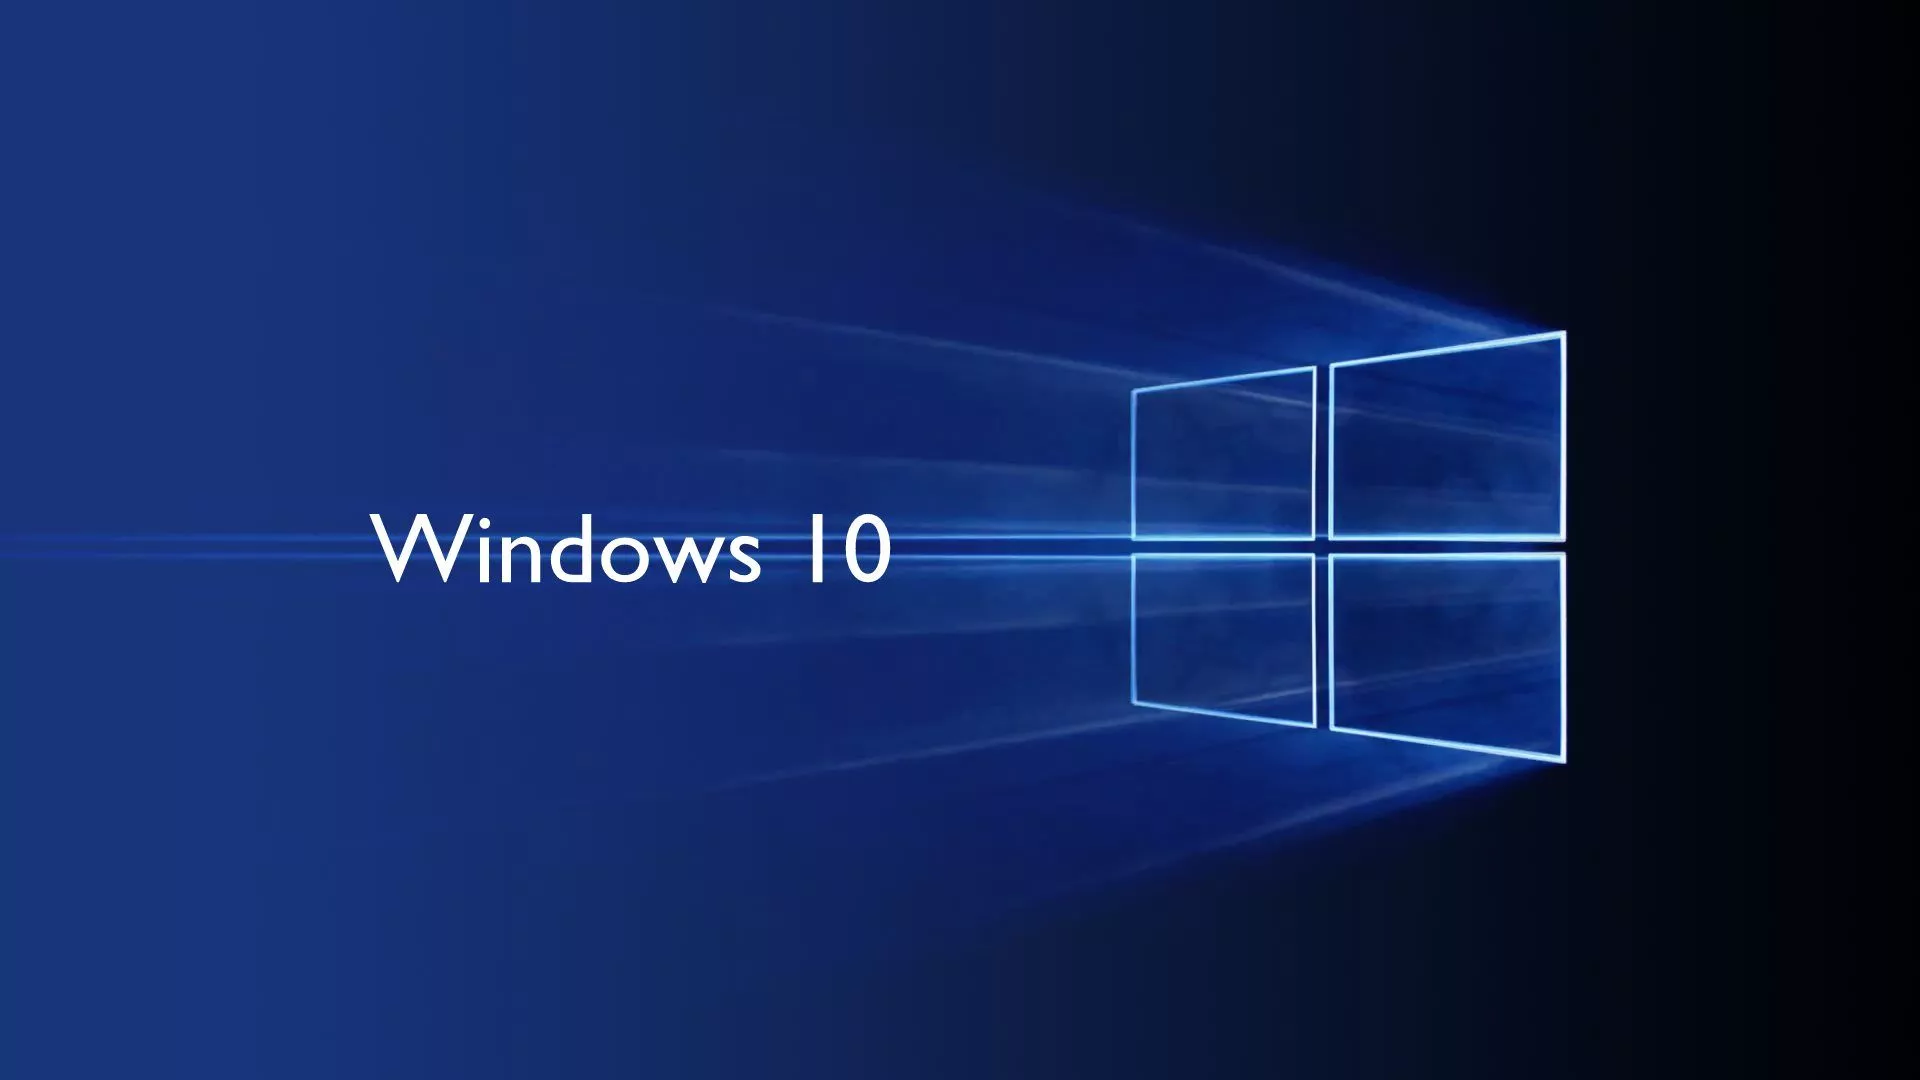 Image result for windows 10